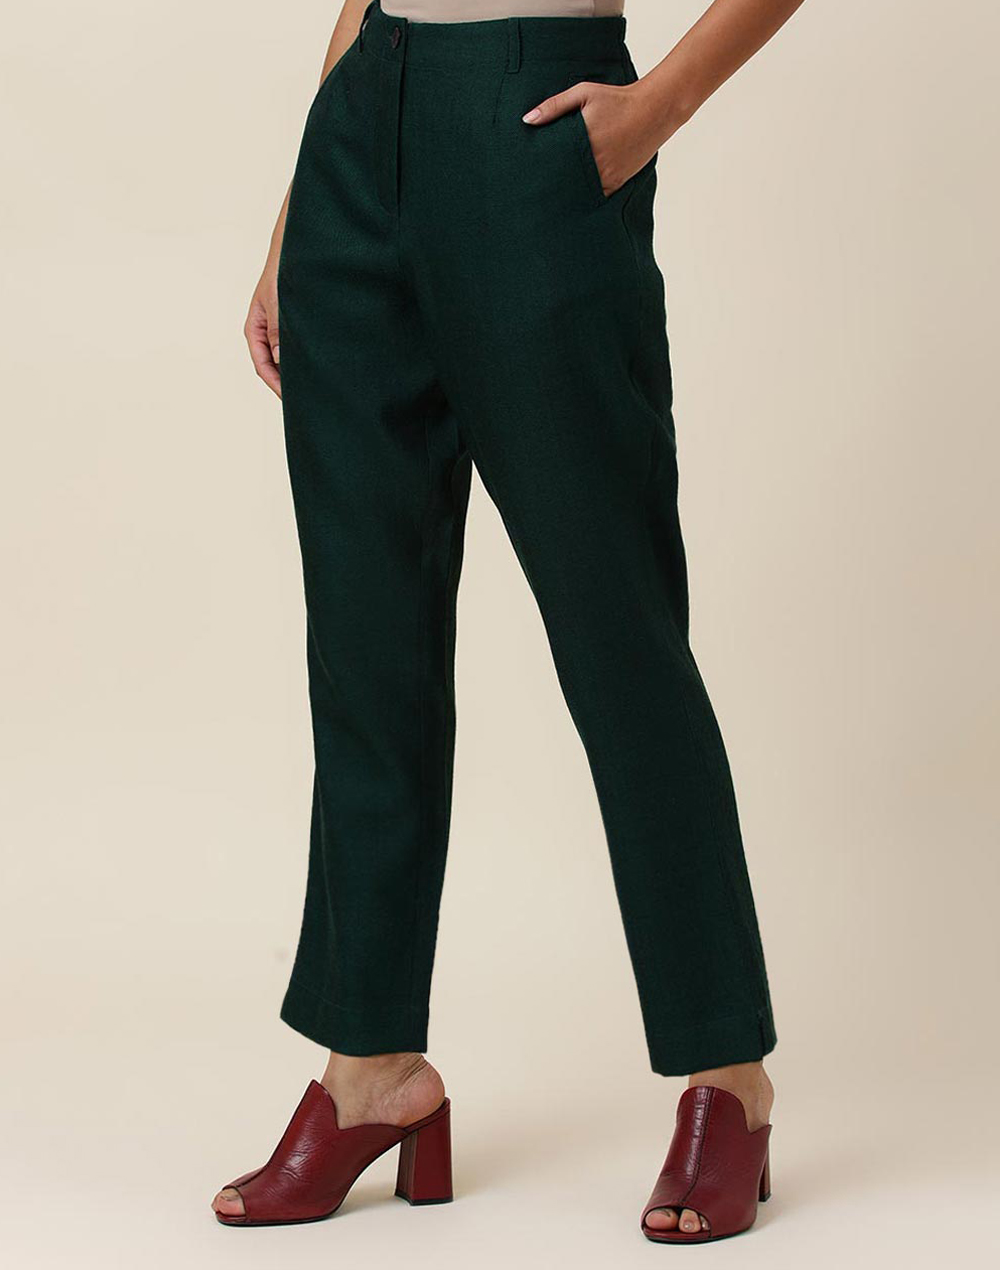 Buy Green Wool Full Length Formal Pant for Women Online at Fabindia ...